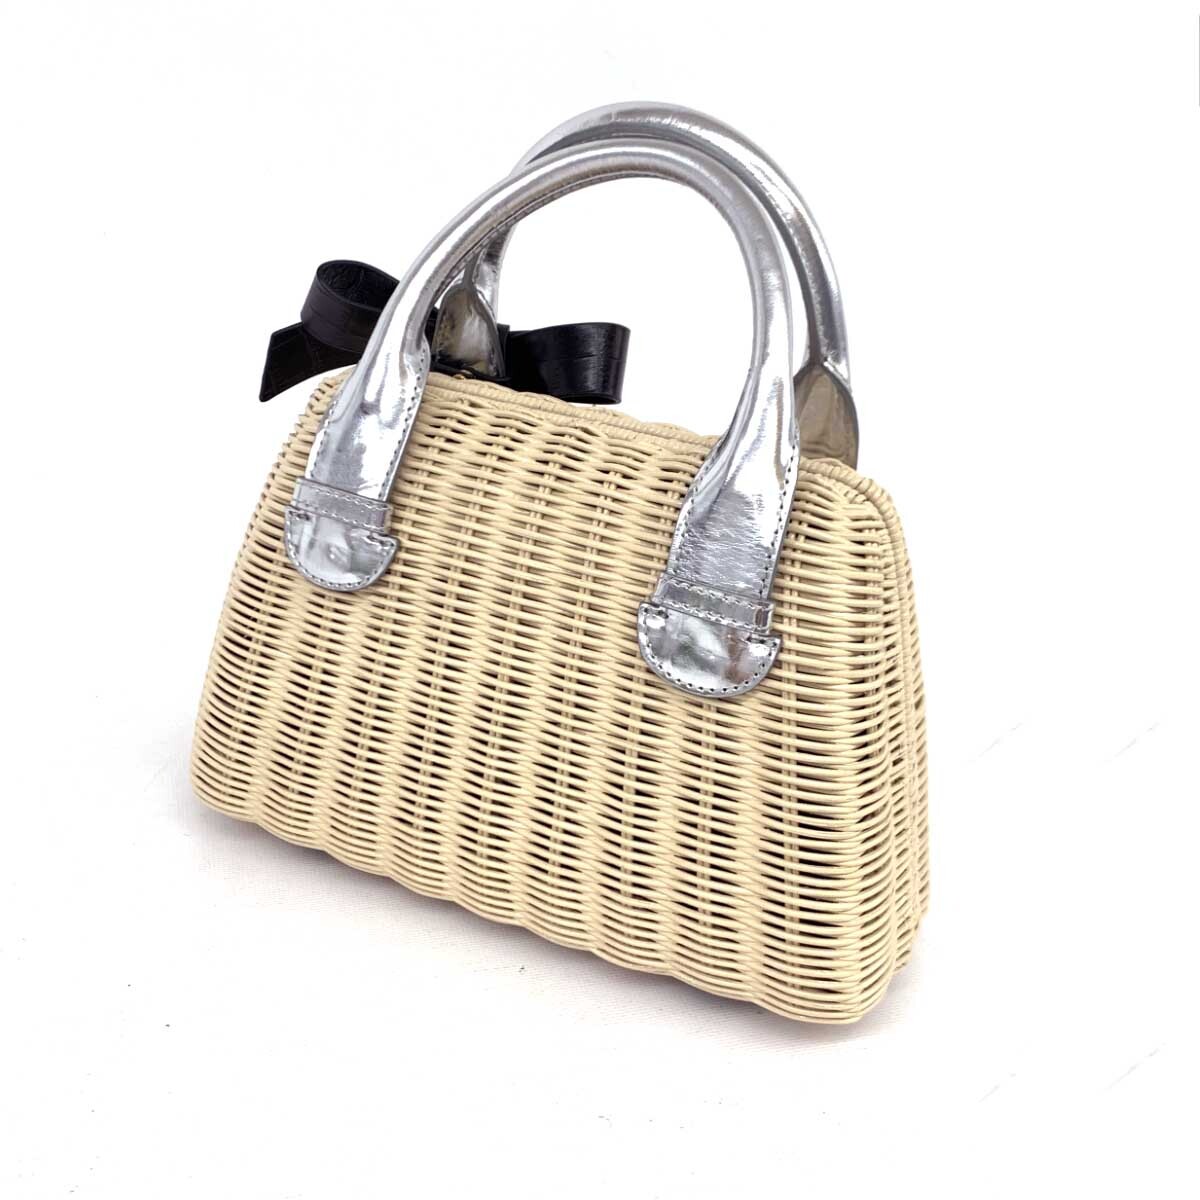  beautiful goods *PAULE KA paul (pole) ka handbag * beige rattan rattan basket wide open ribbon knitting lady's bag bag 